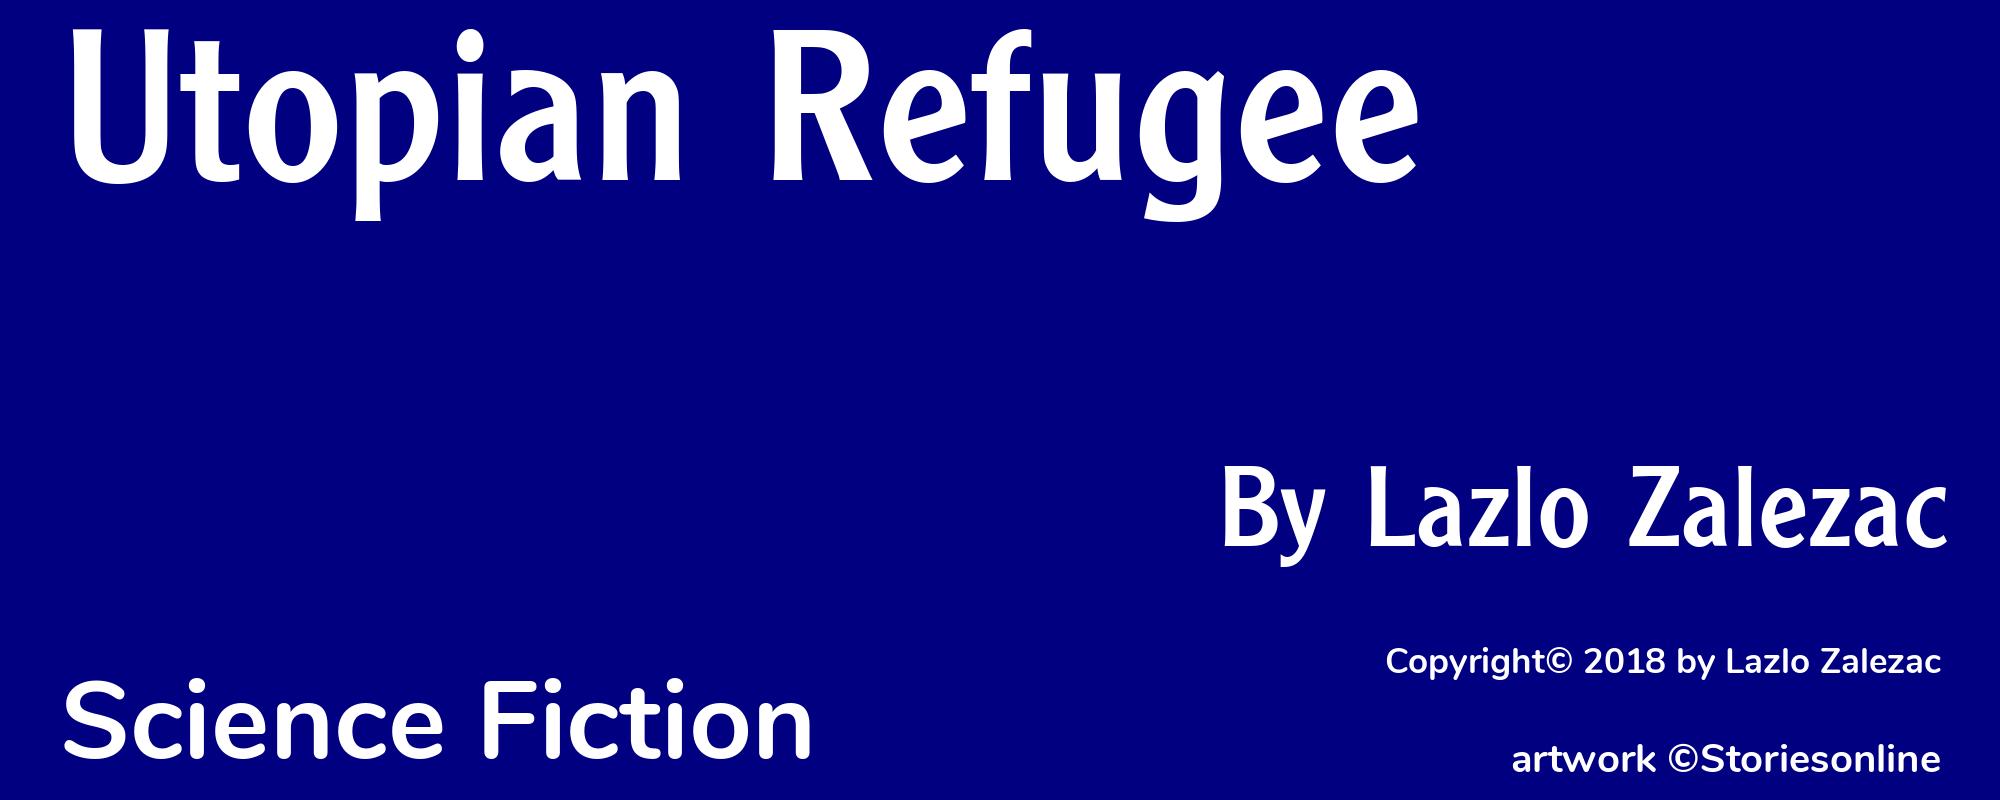 Utopian Refugee - Cover